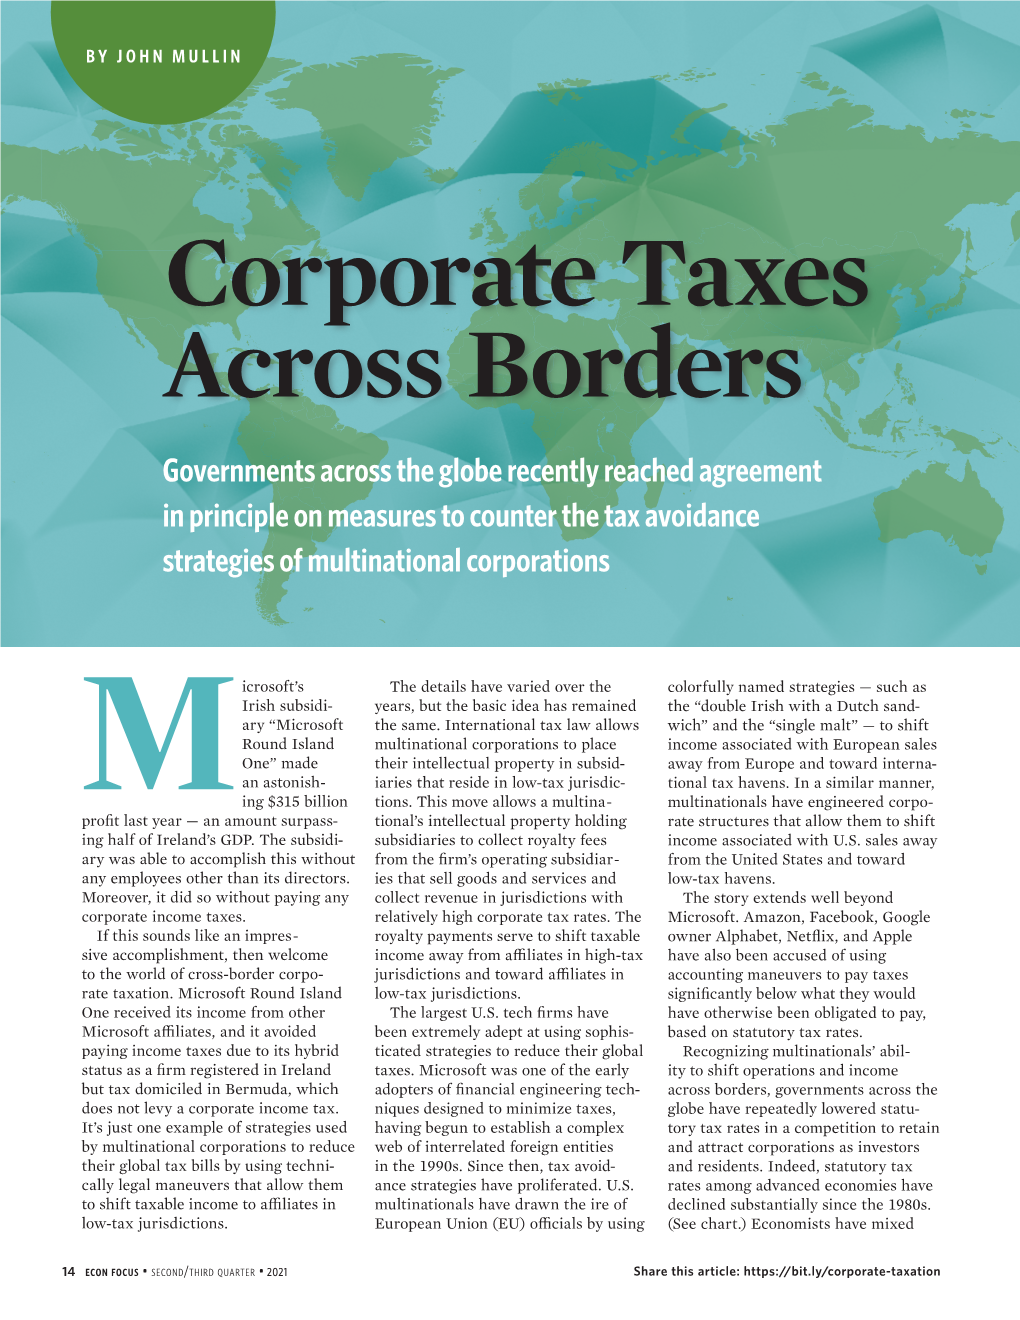 Corporate Taxes Across Borders